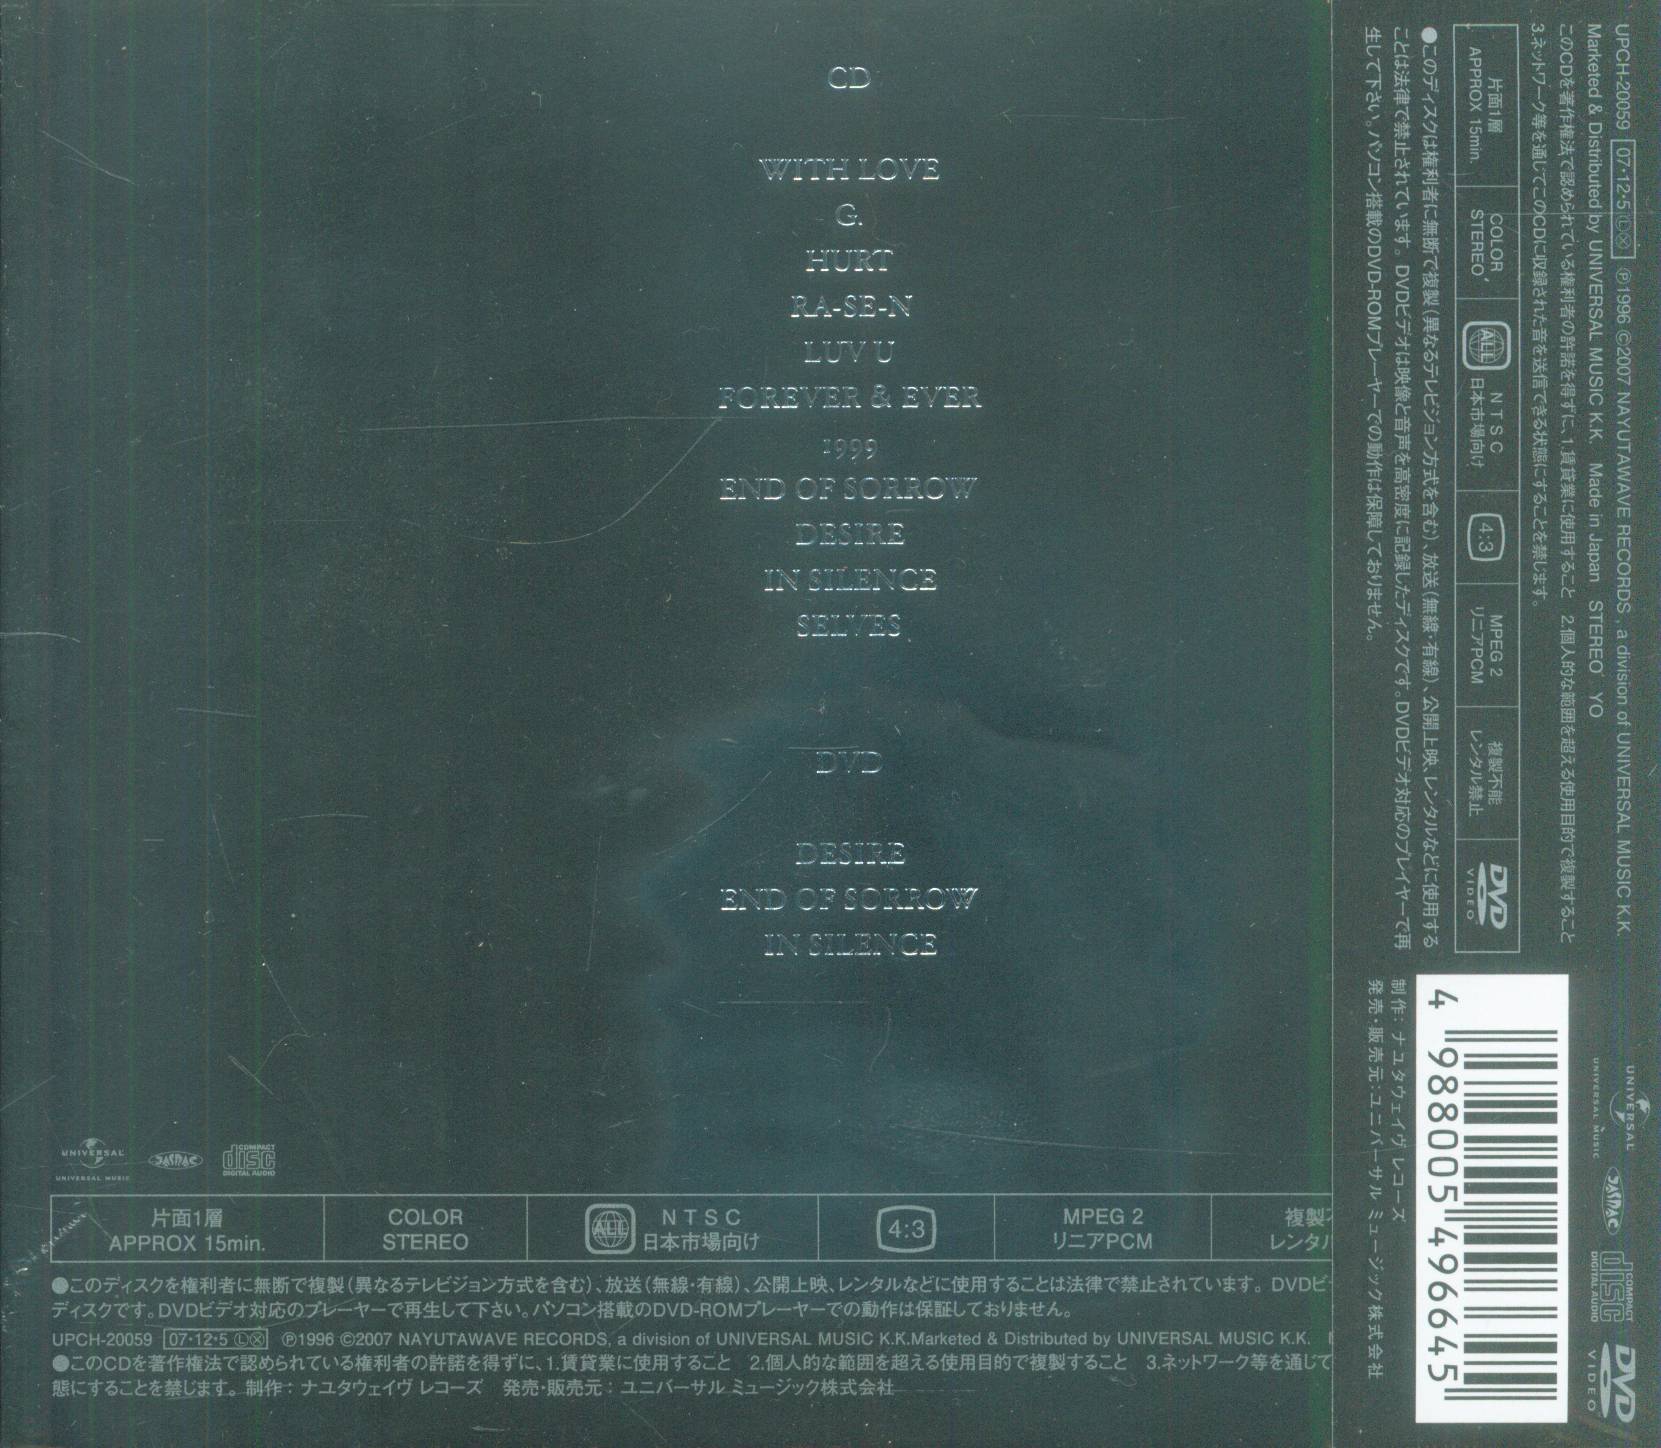 LUNA SEA オリジナルアルバムリマスター盤 全7作品セット - 邦楽